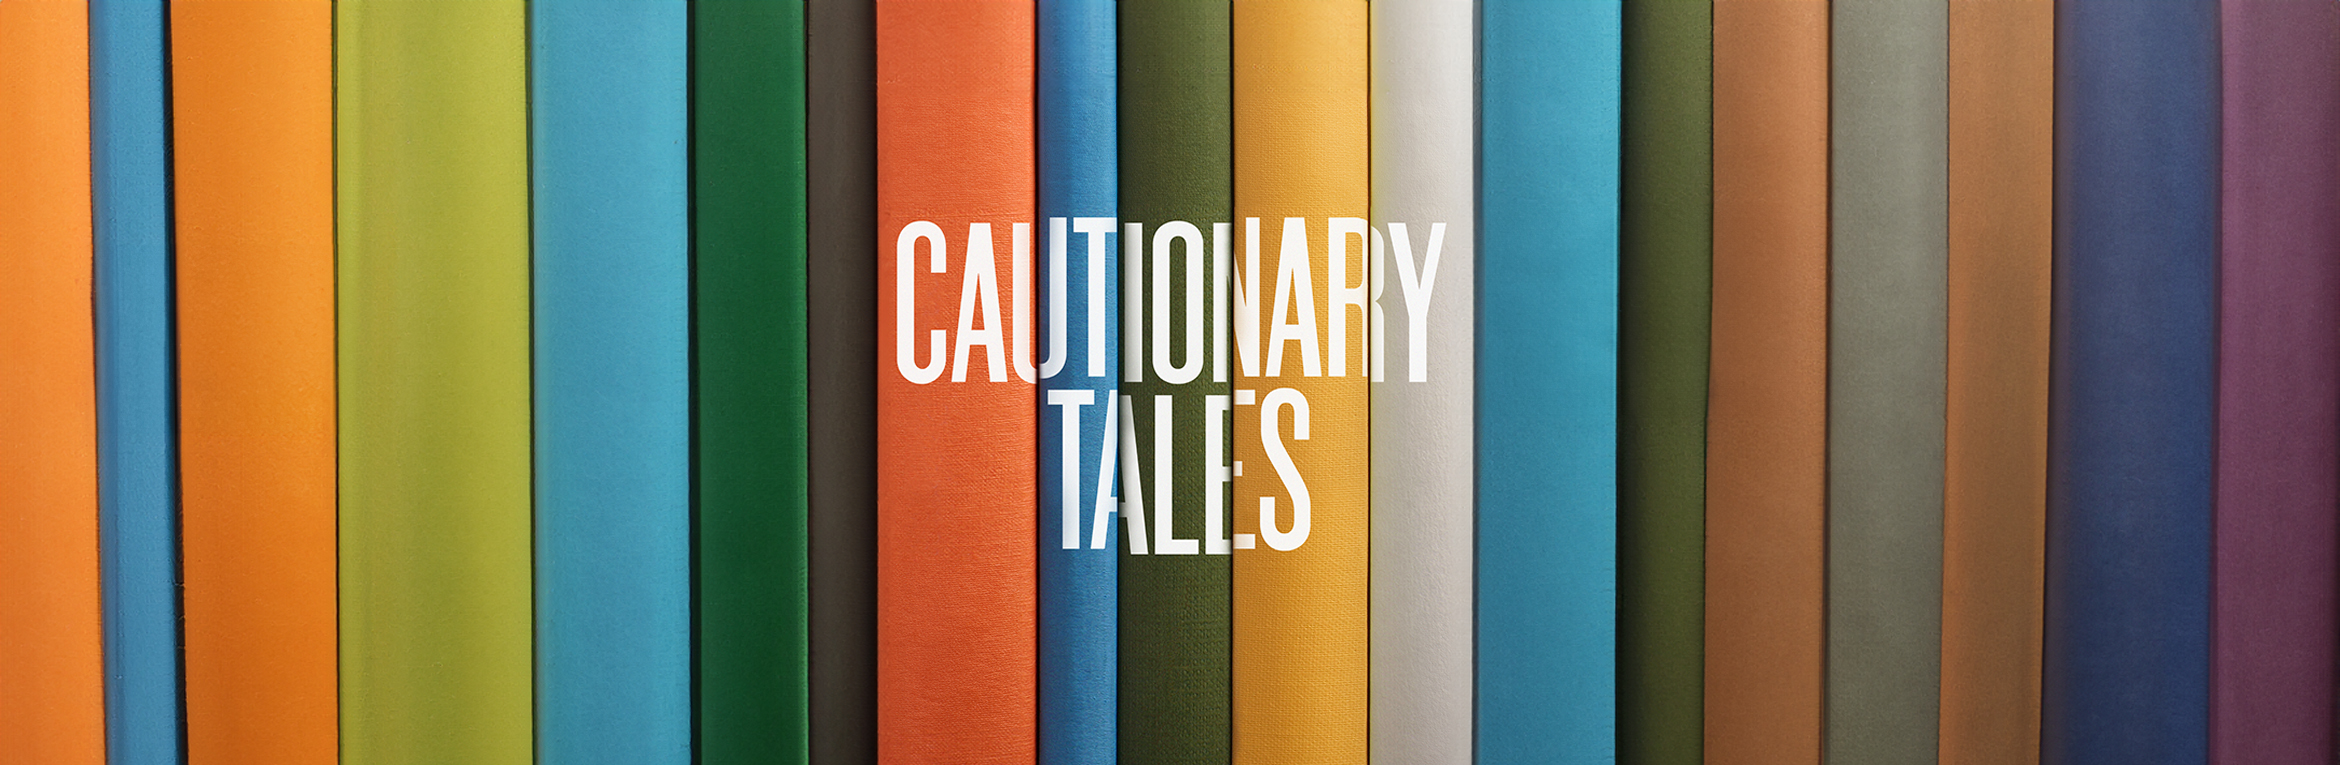 Cautionary Tales